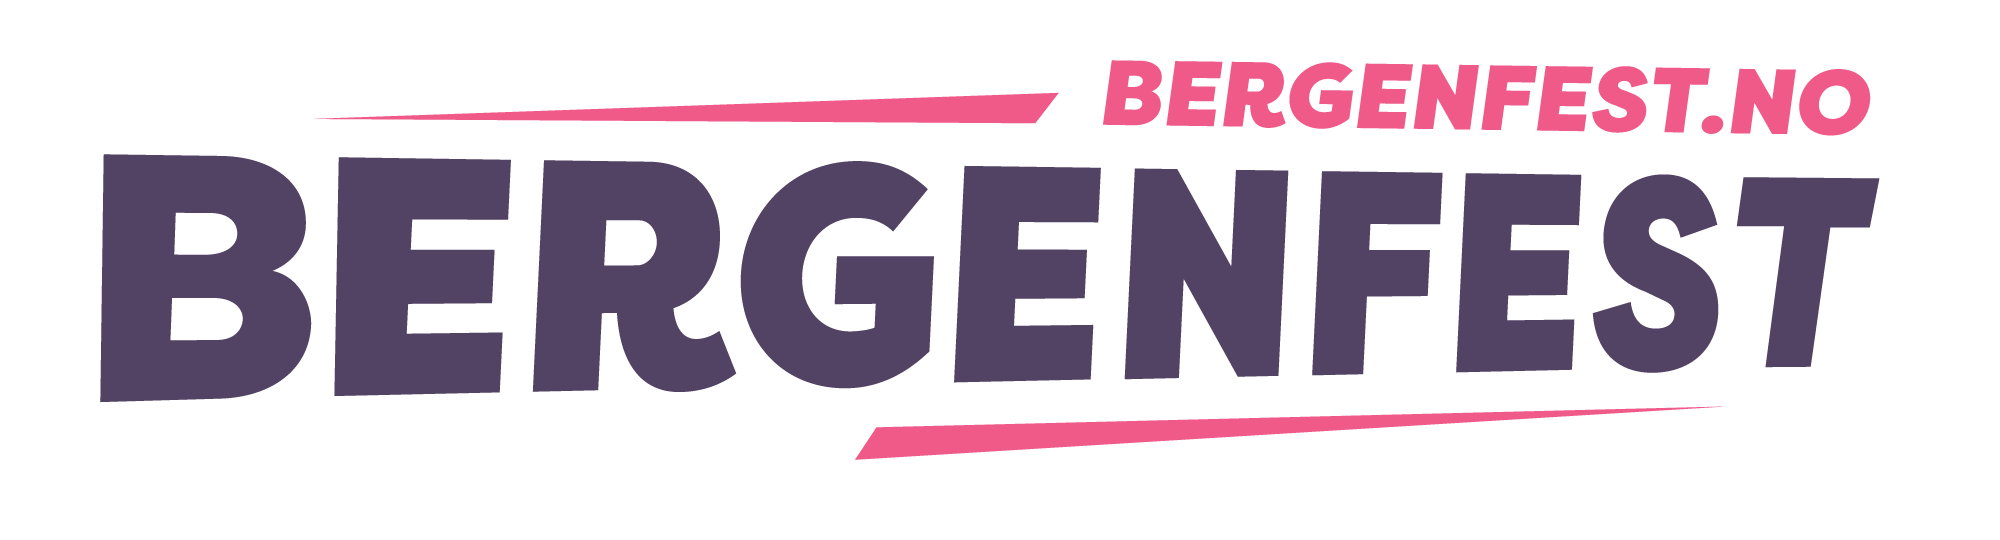 Bergenfest logo